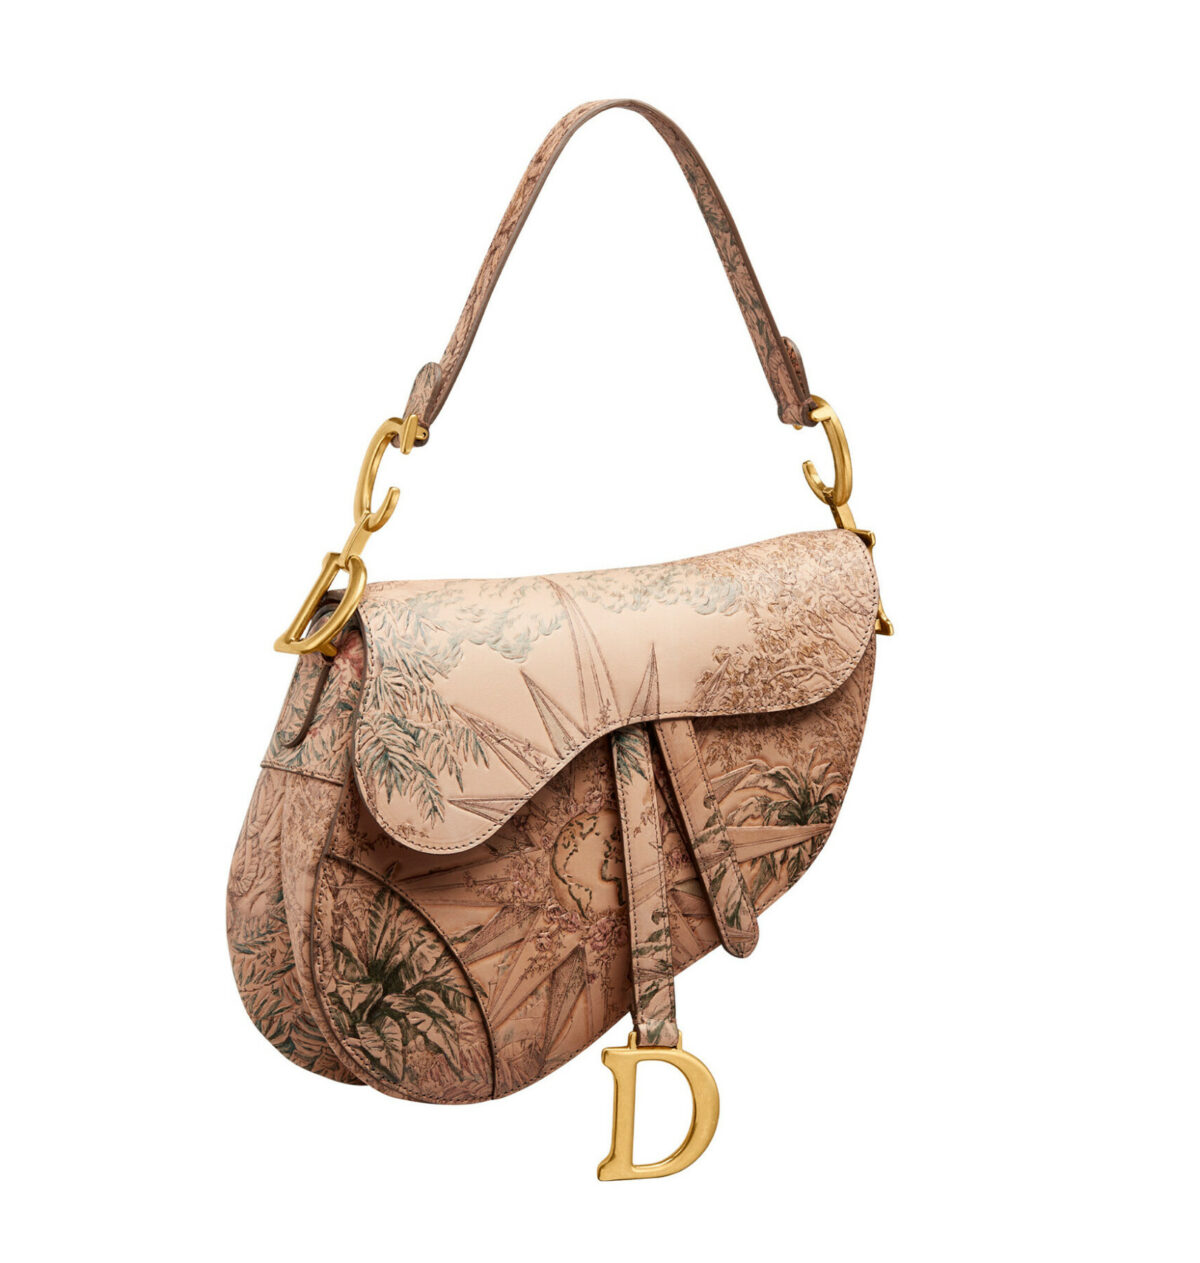 Designer leather handbag with pattern 